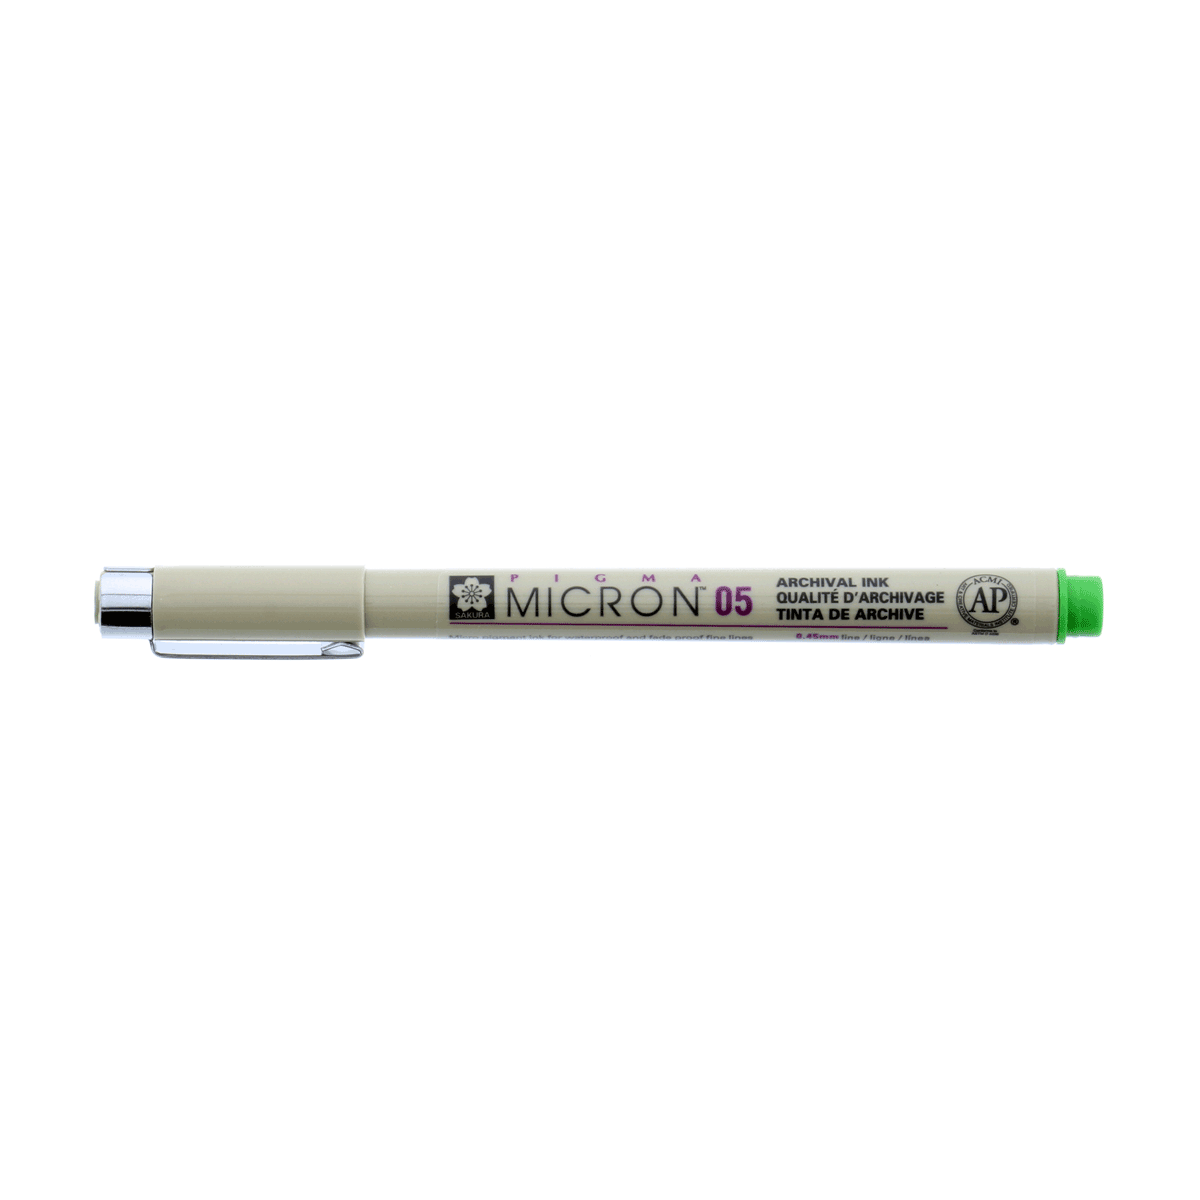 Micron Pigma Pen - Fresh Green 05 .45mm Line